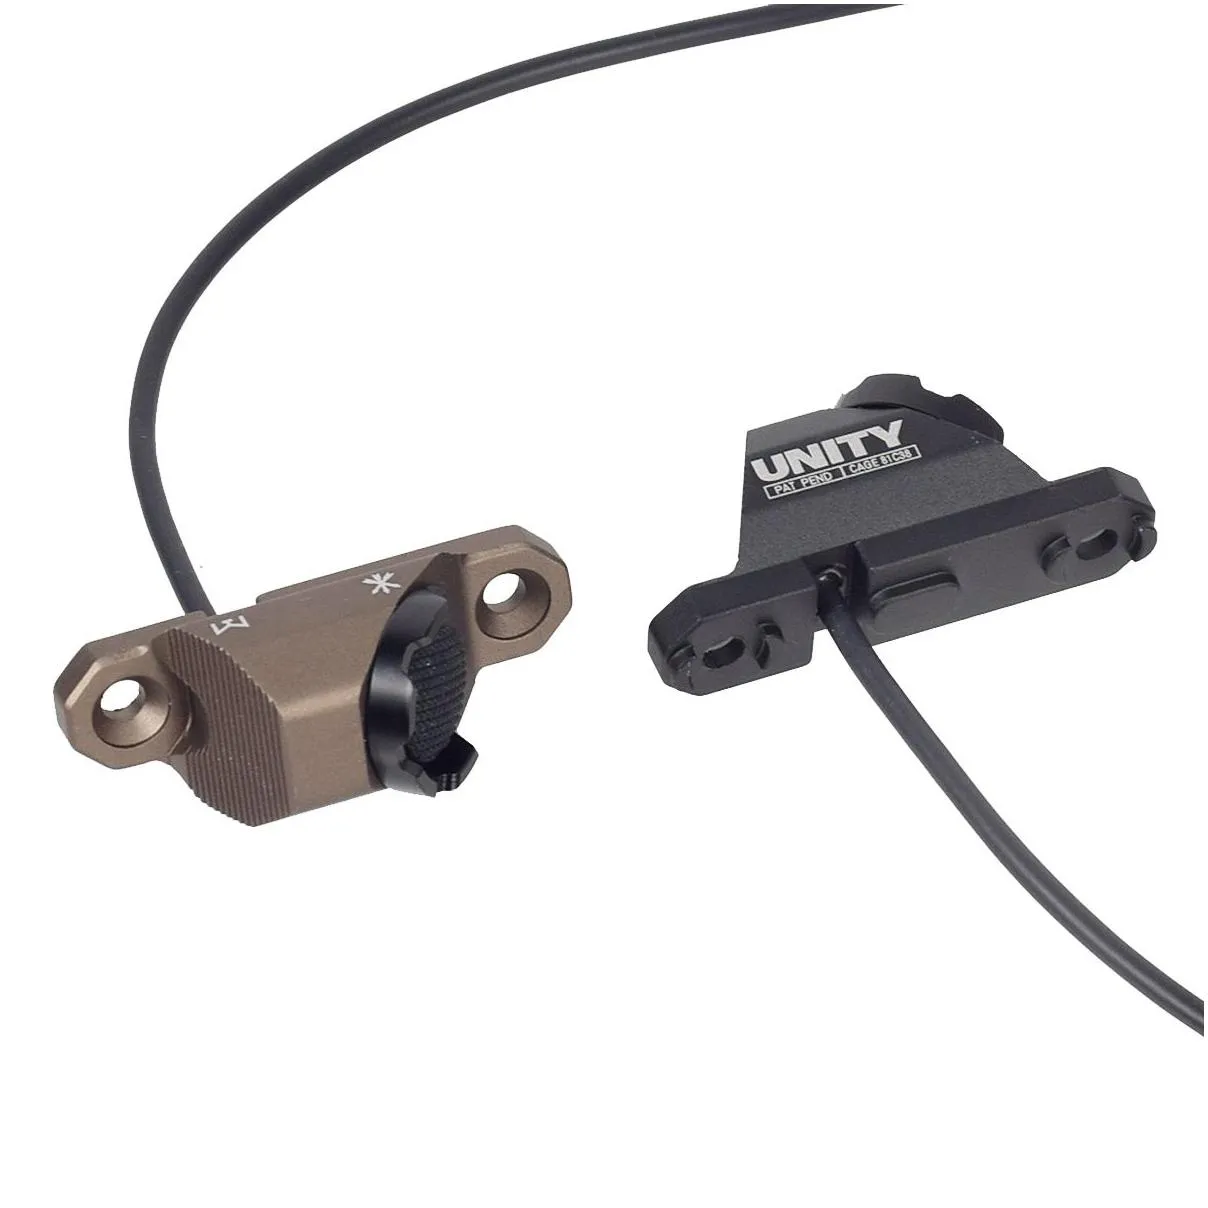 accessories unity tactical button pressure remote switch fit mlok keymod rail for surefire m300 m600 dbala2 peq15 2.5 sf plugs